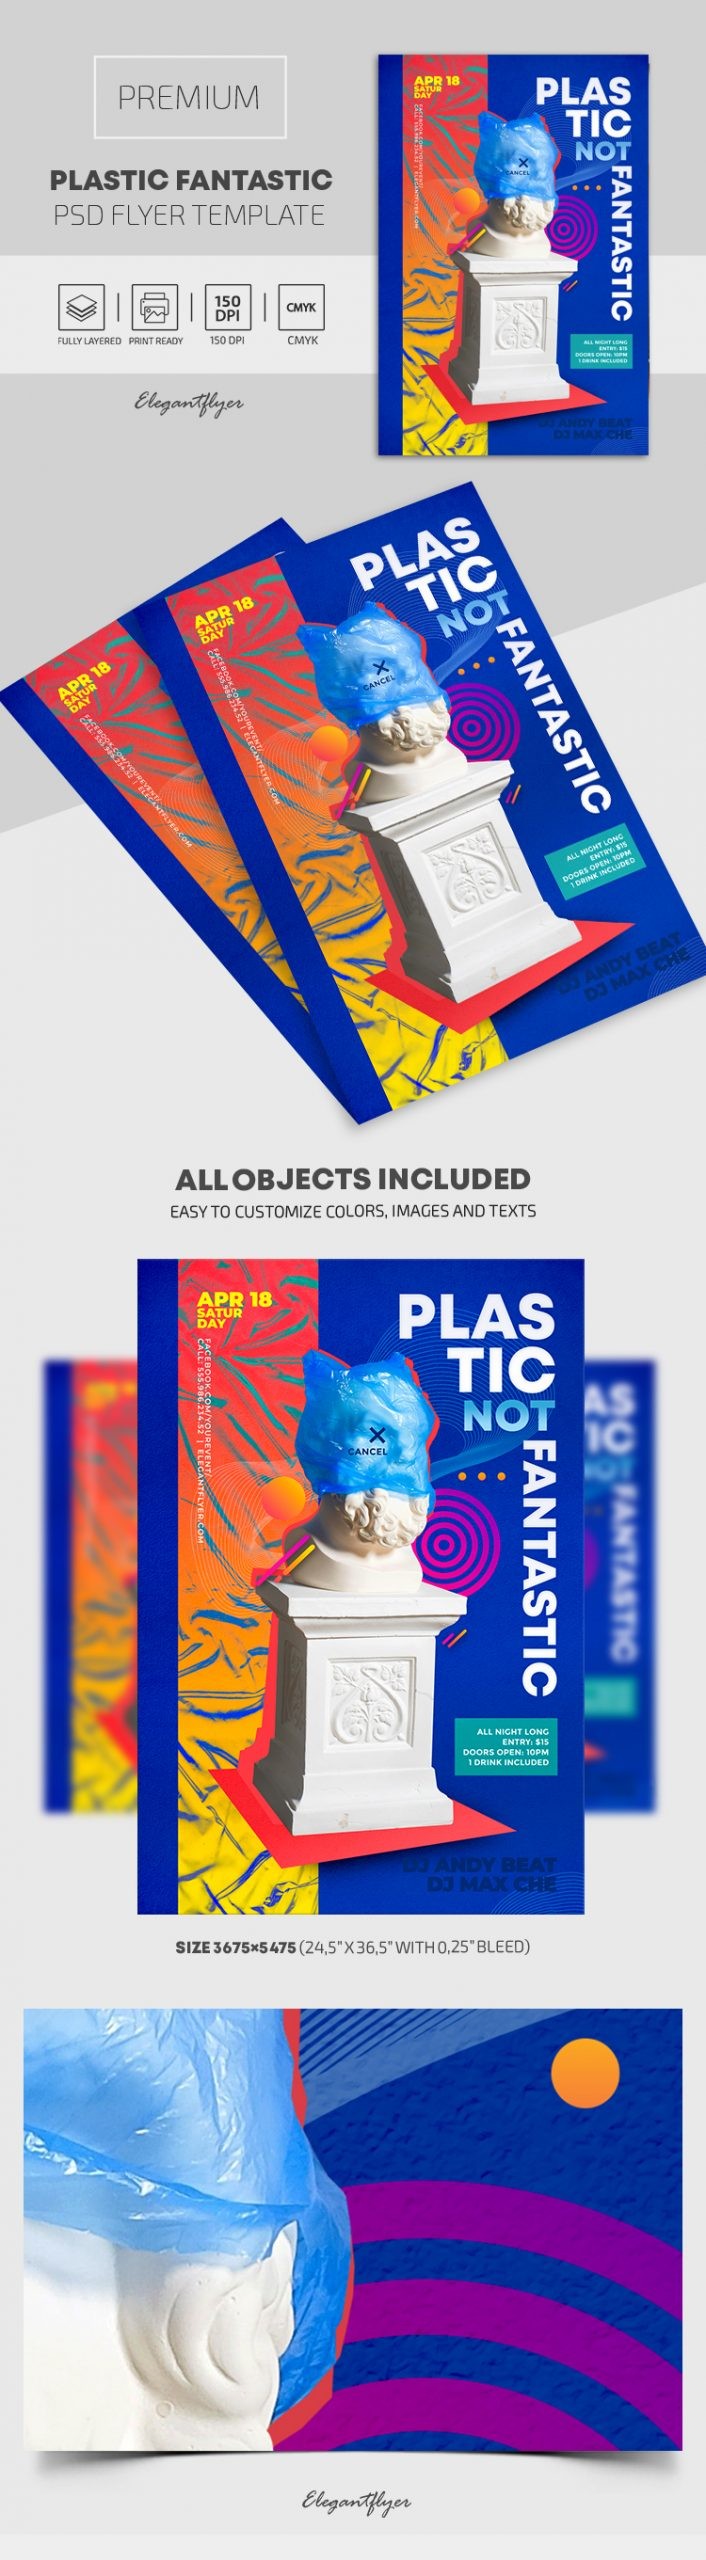 Affiche plastique fantastique by ElegantFlyer